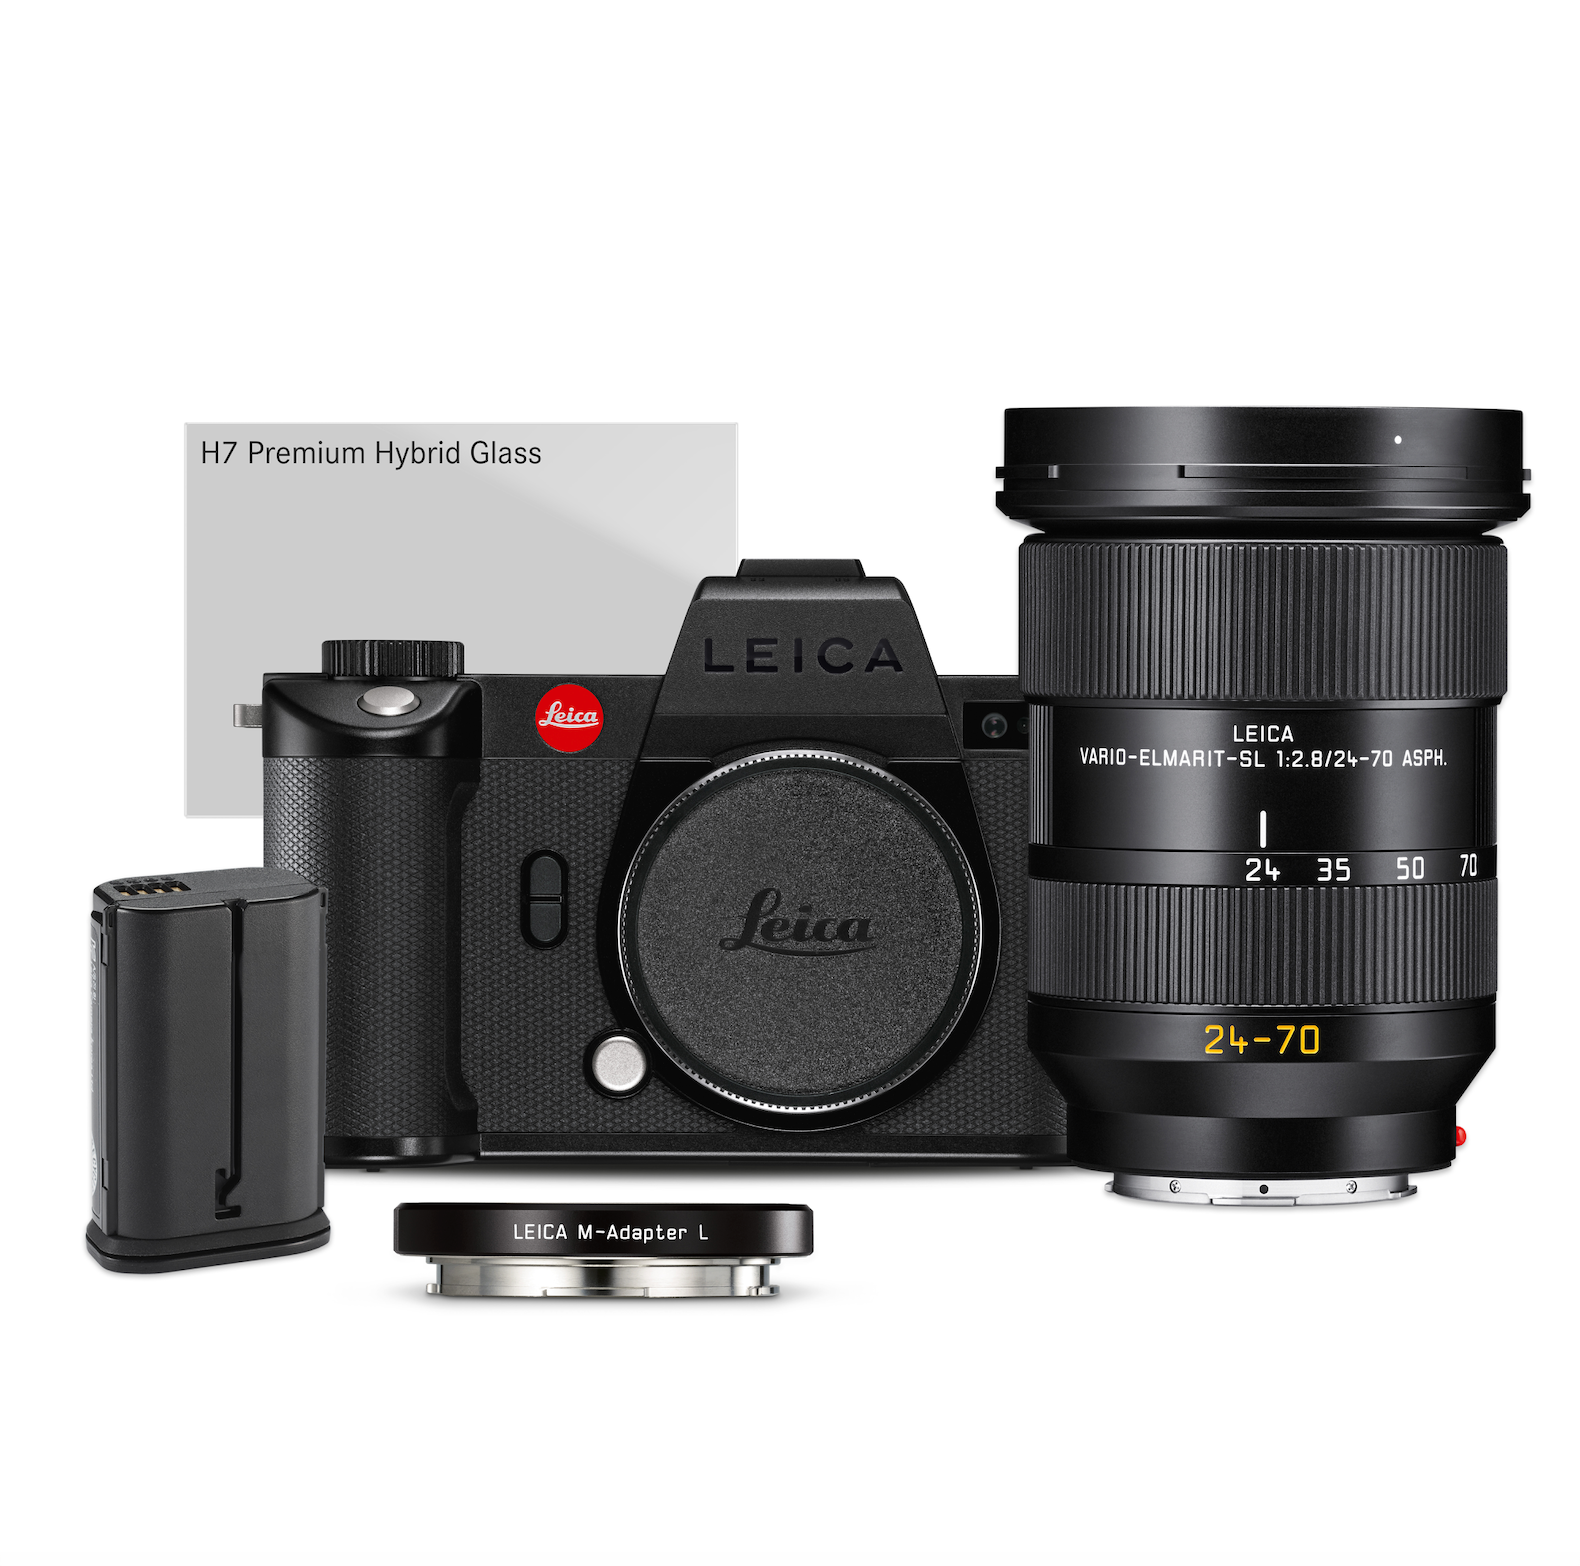 Leica SL2-S with Vario-Elmarit-SL 24-70mm f/2.8 ASPH. Lens Kit